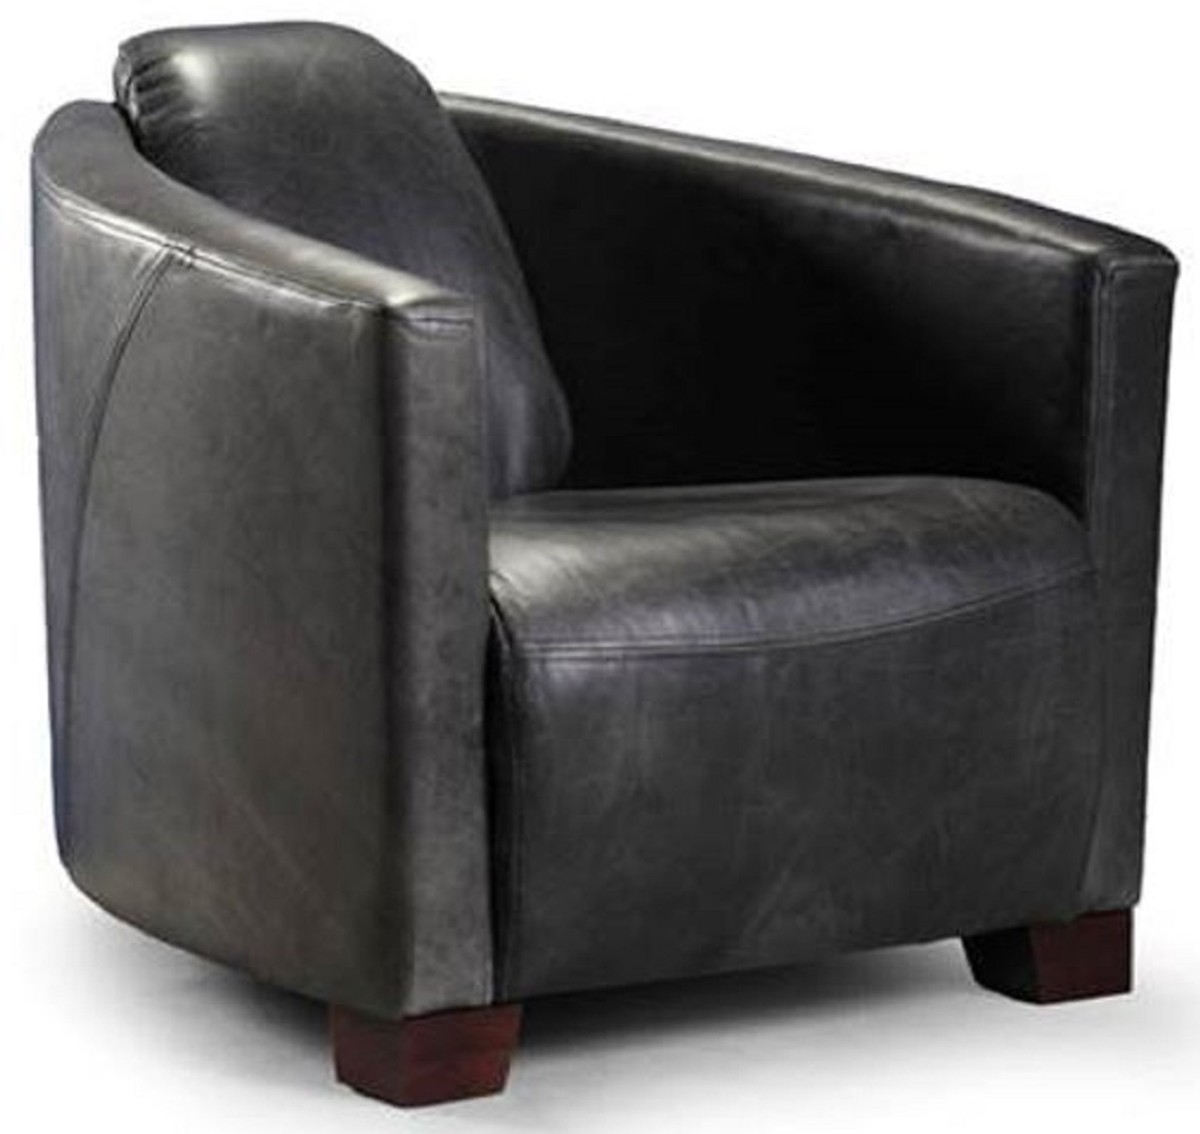 Casa Padrino fauteuil baroque de luxe en cuir marron foncé / marron -  Fauteuil de salon en cuir